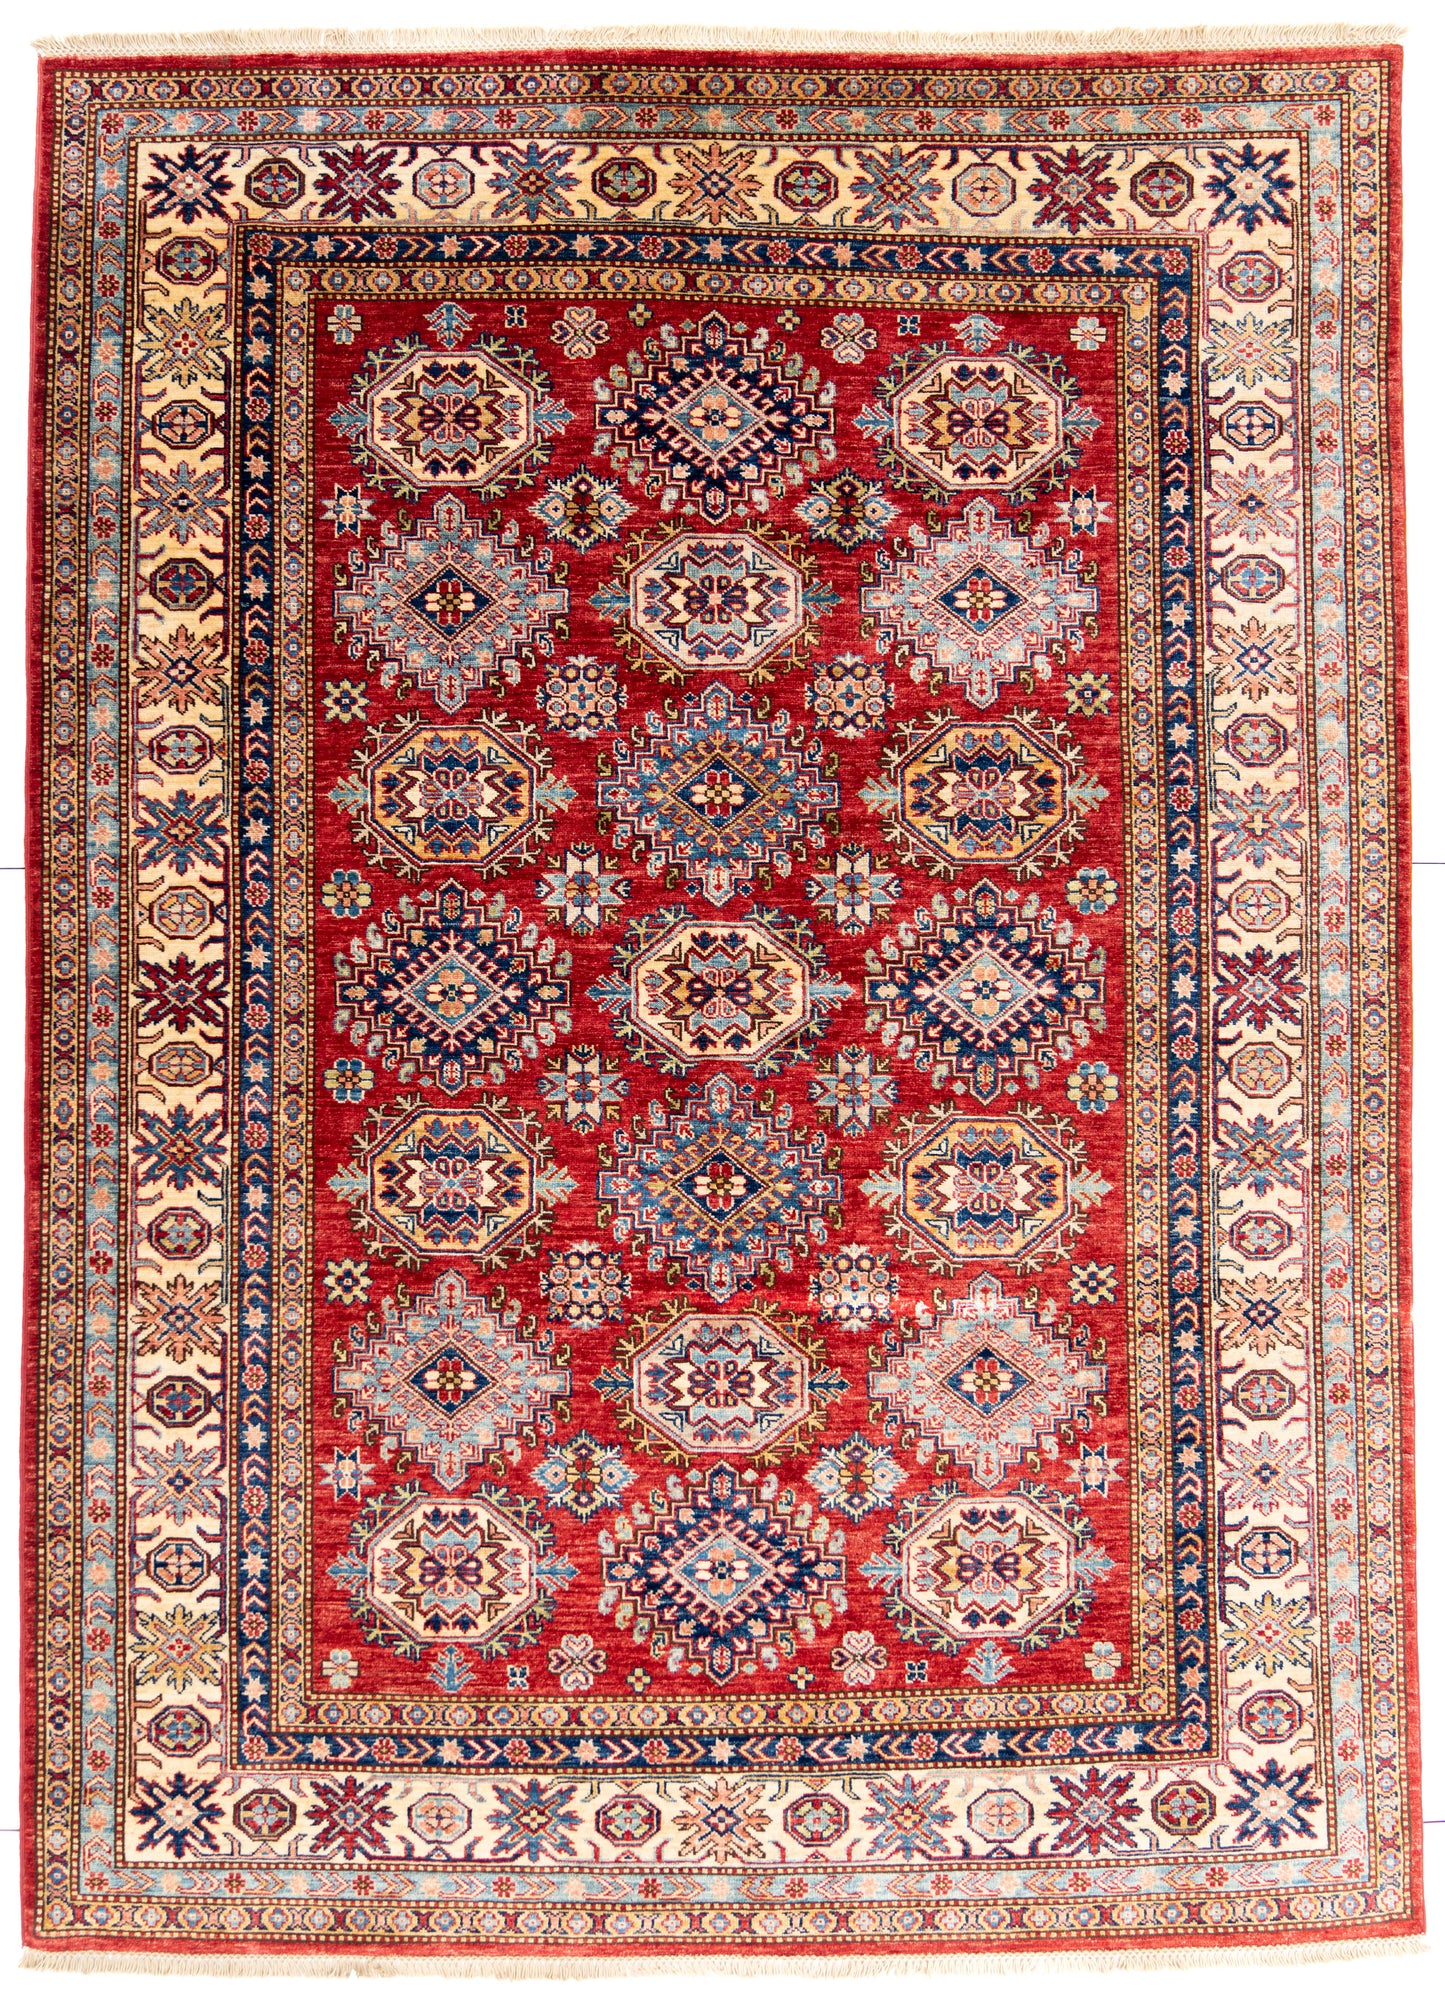 Red Kazak Carpet with Blue & Cream Borders